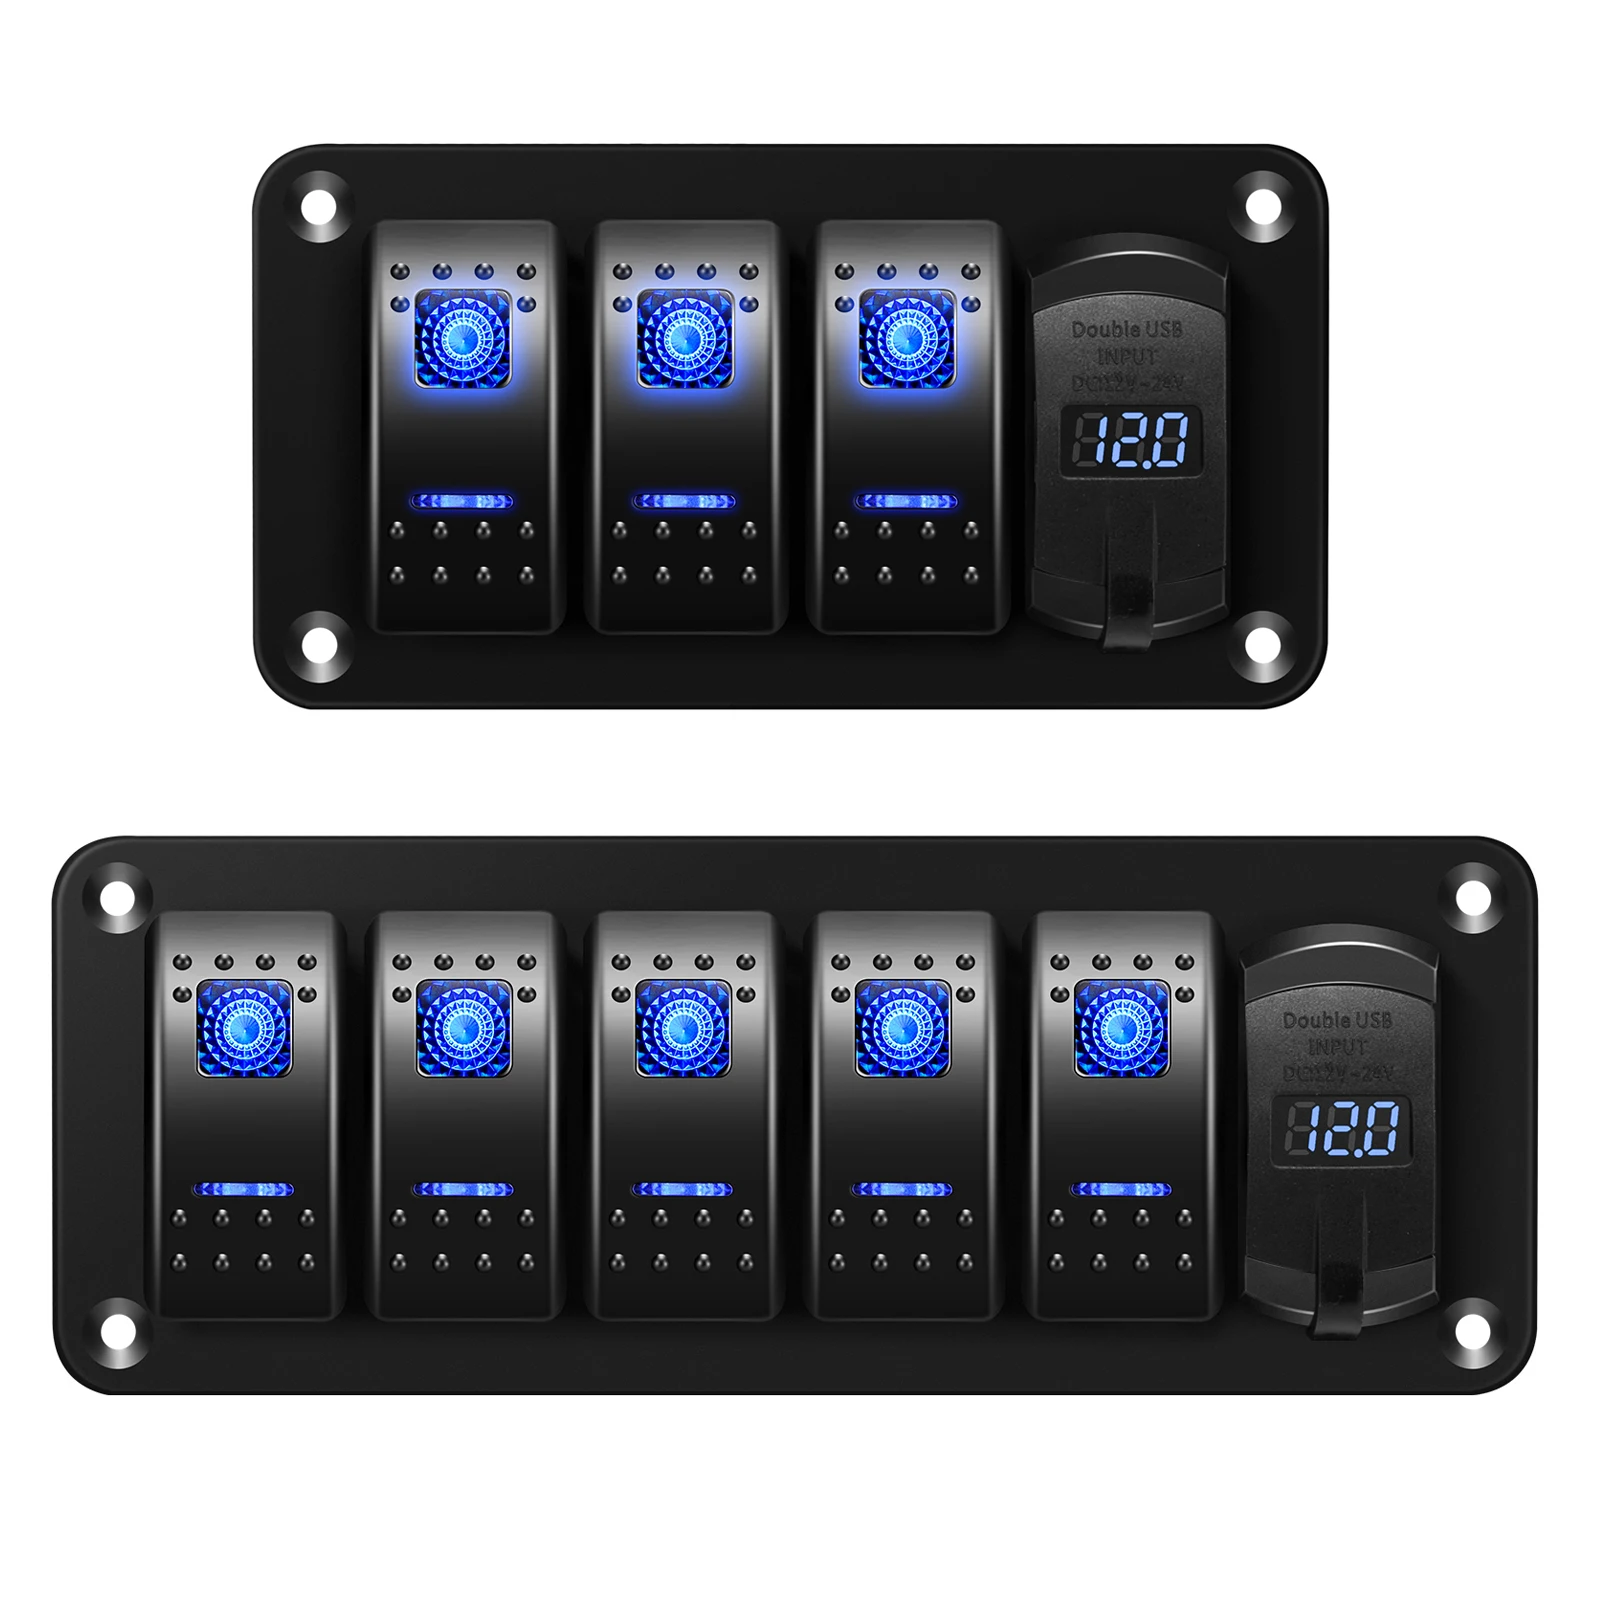 

3/5 Gang Rocker Switch Panel ON/OFF Switch 12V-24V LED Digital Voltmeter 4.8A Dual USB Charger for Car Truck Boat Trailer RV